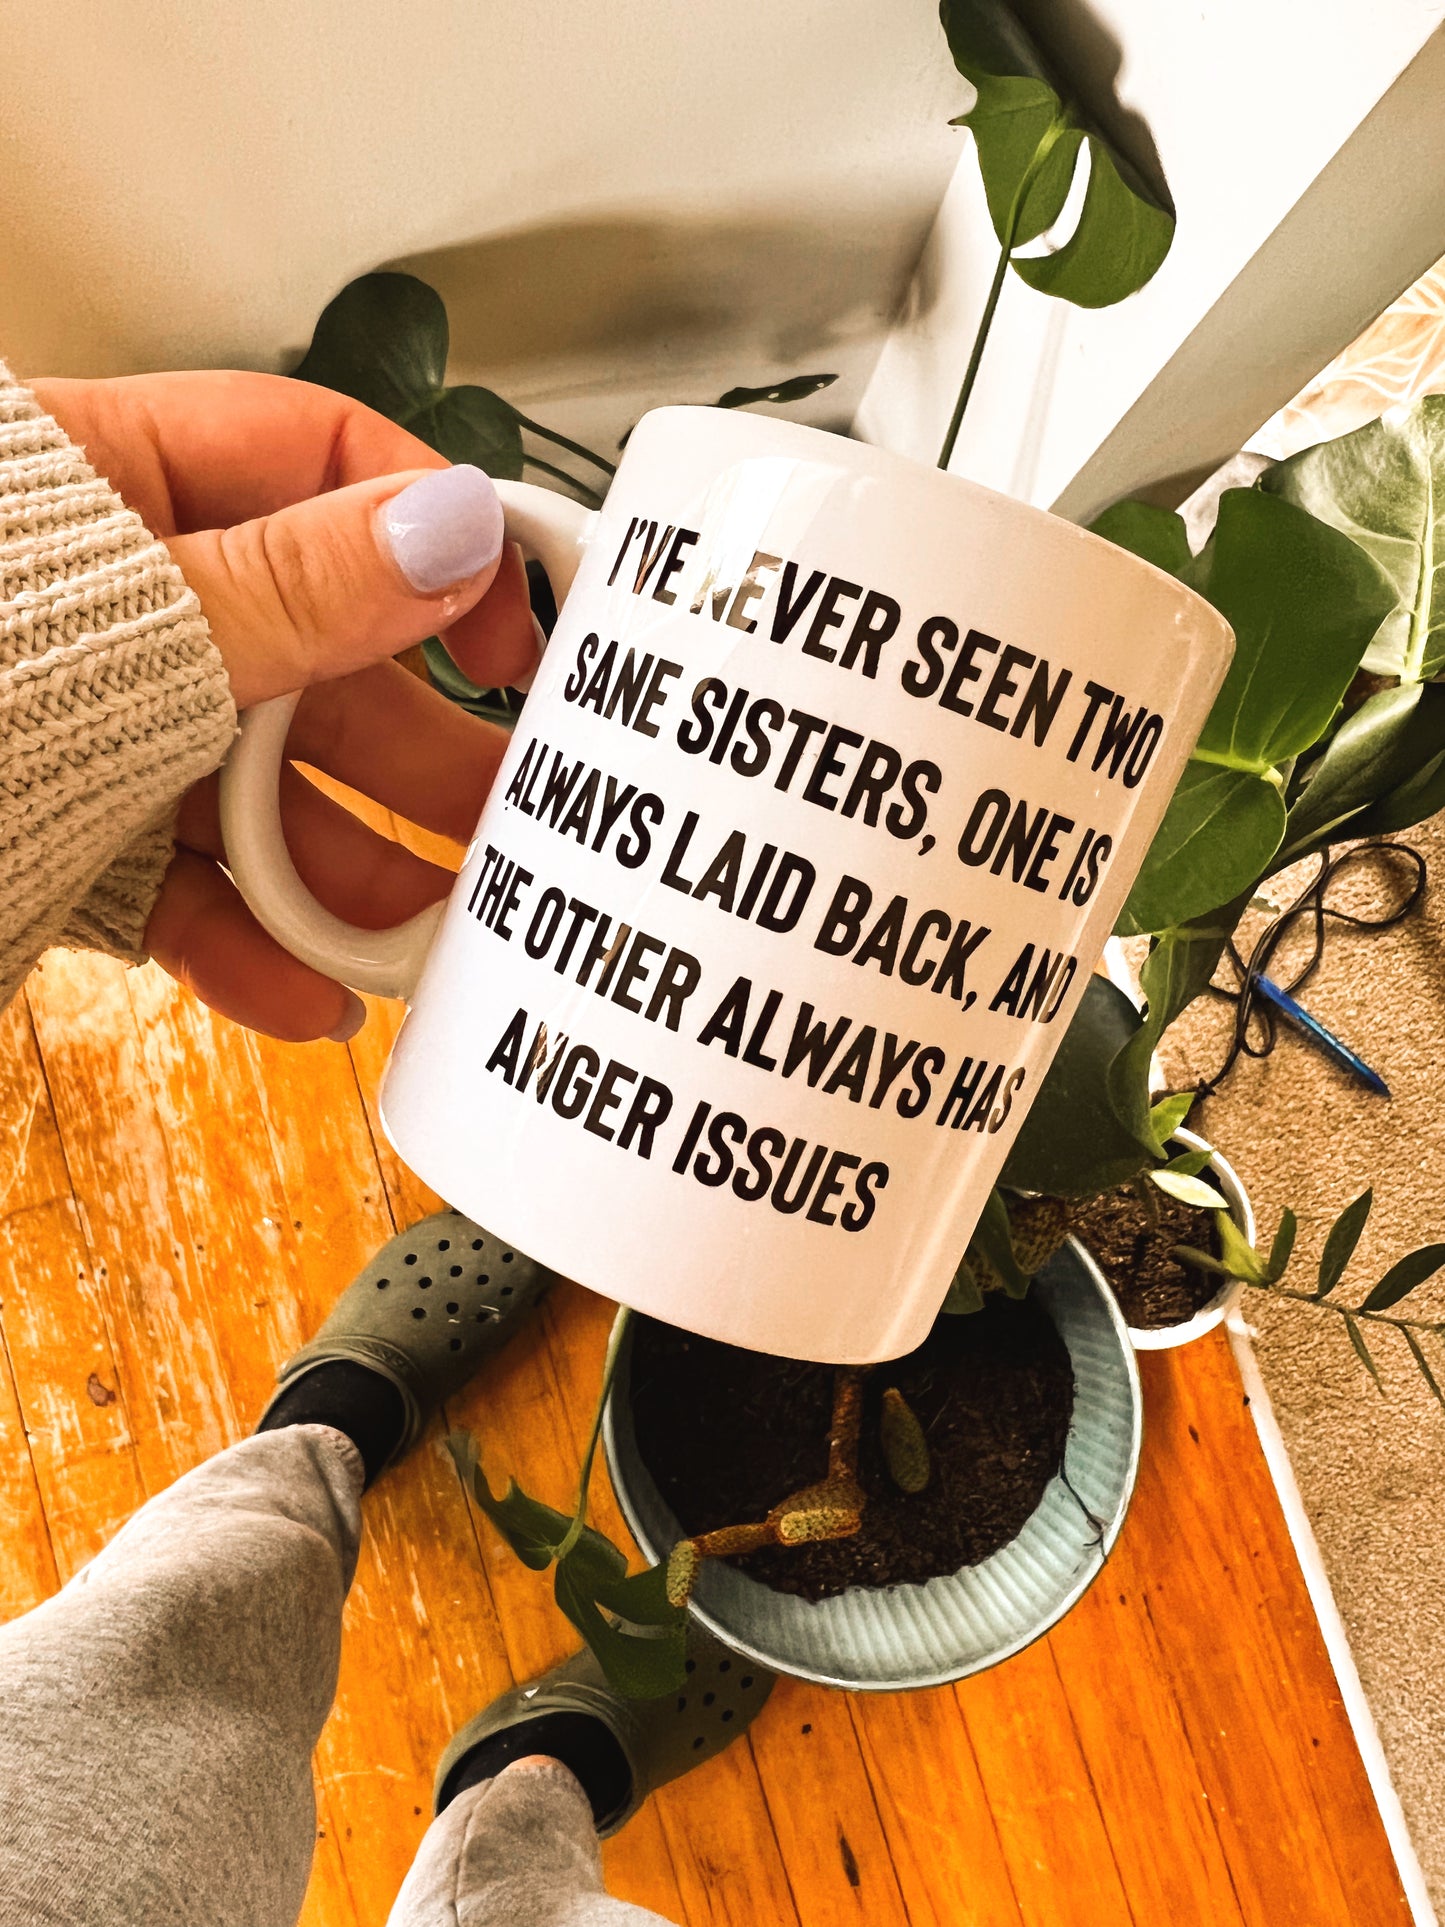 Sane sister sisters mug